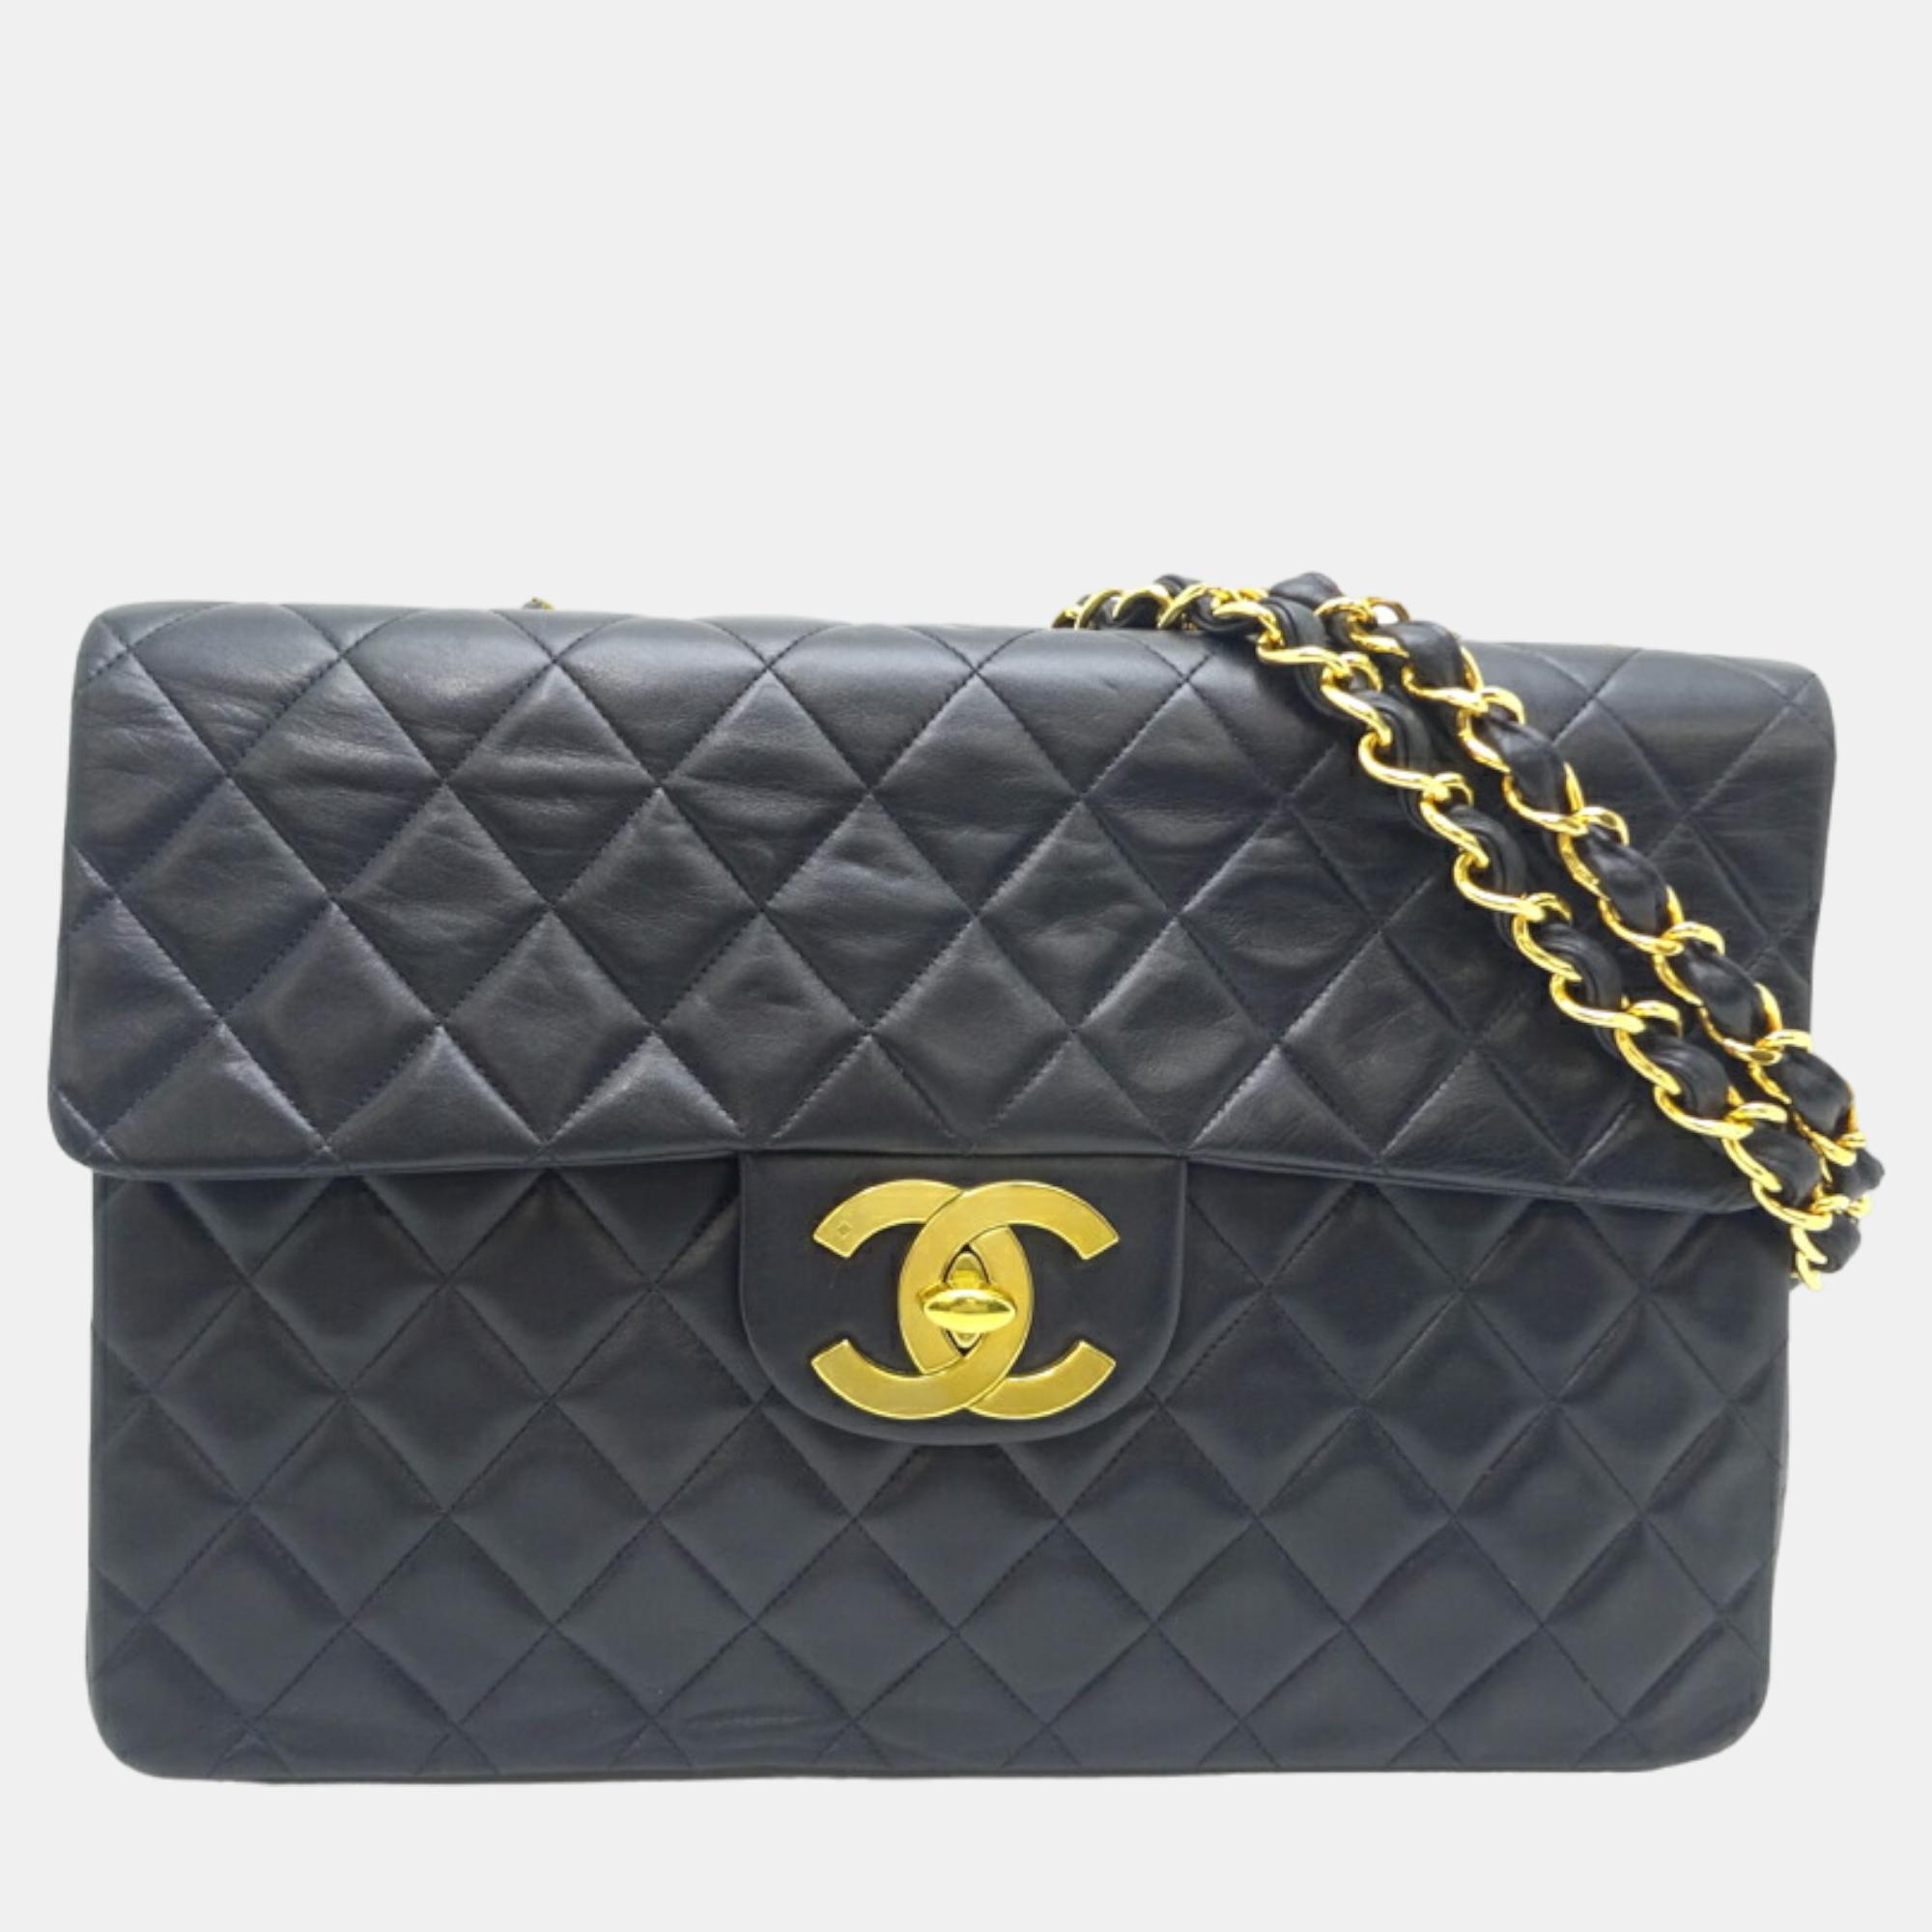 Chanel lambskin leather maxi classic single flap shoulder bag